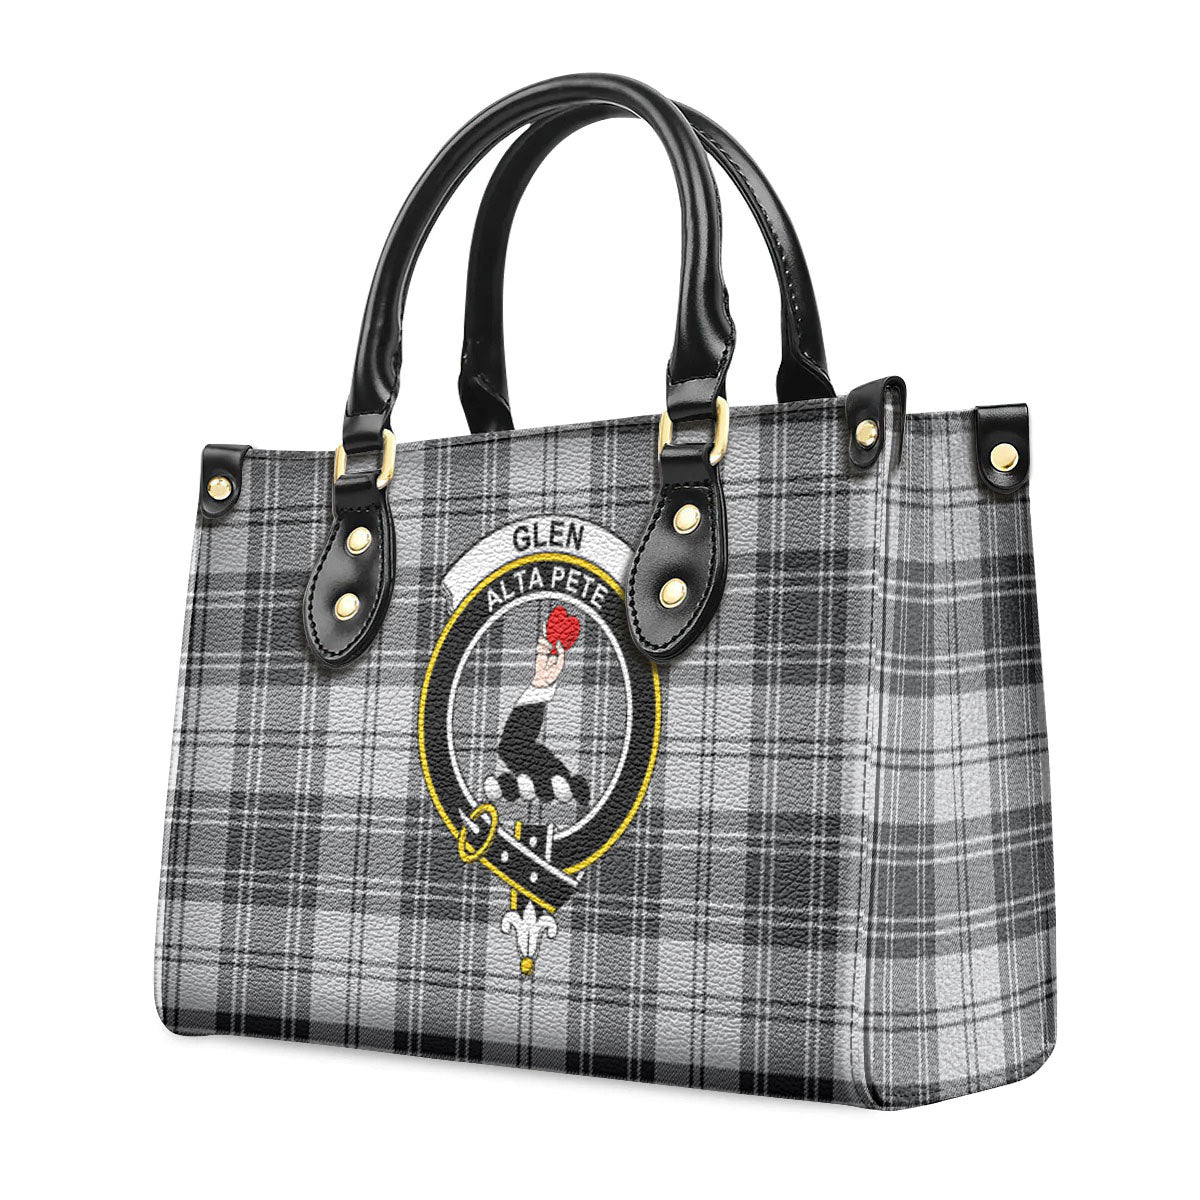 Glen Tartan Crest Leather Handbag